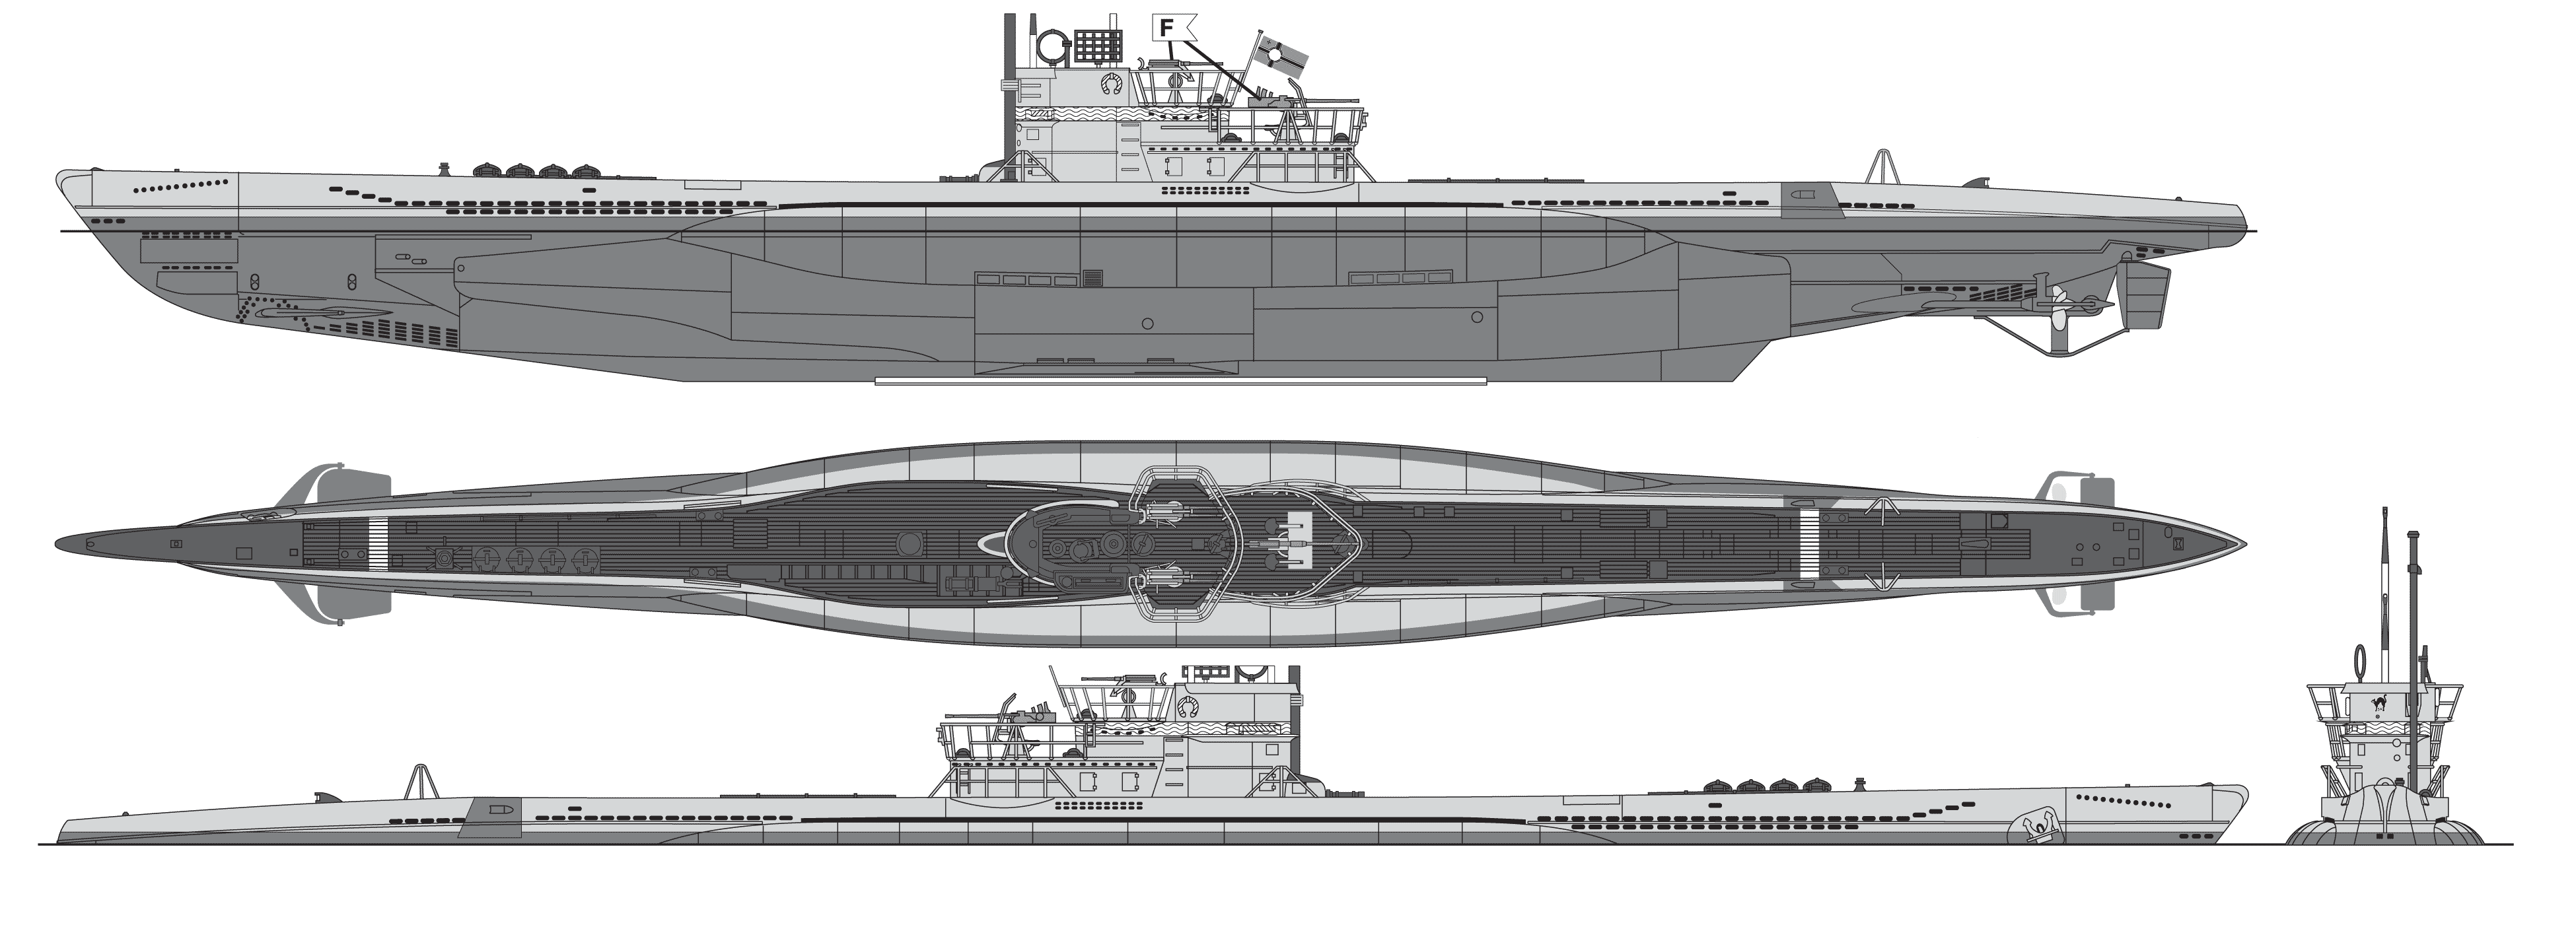 U-998 blueprint